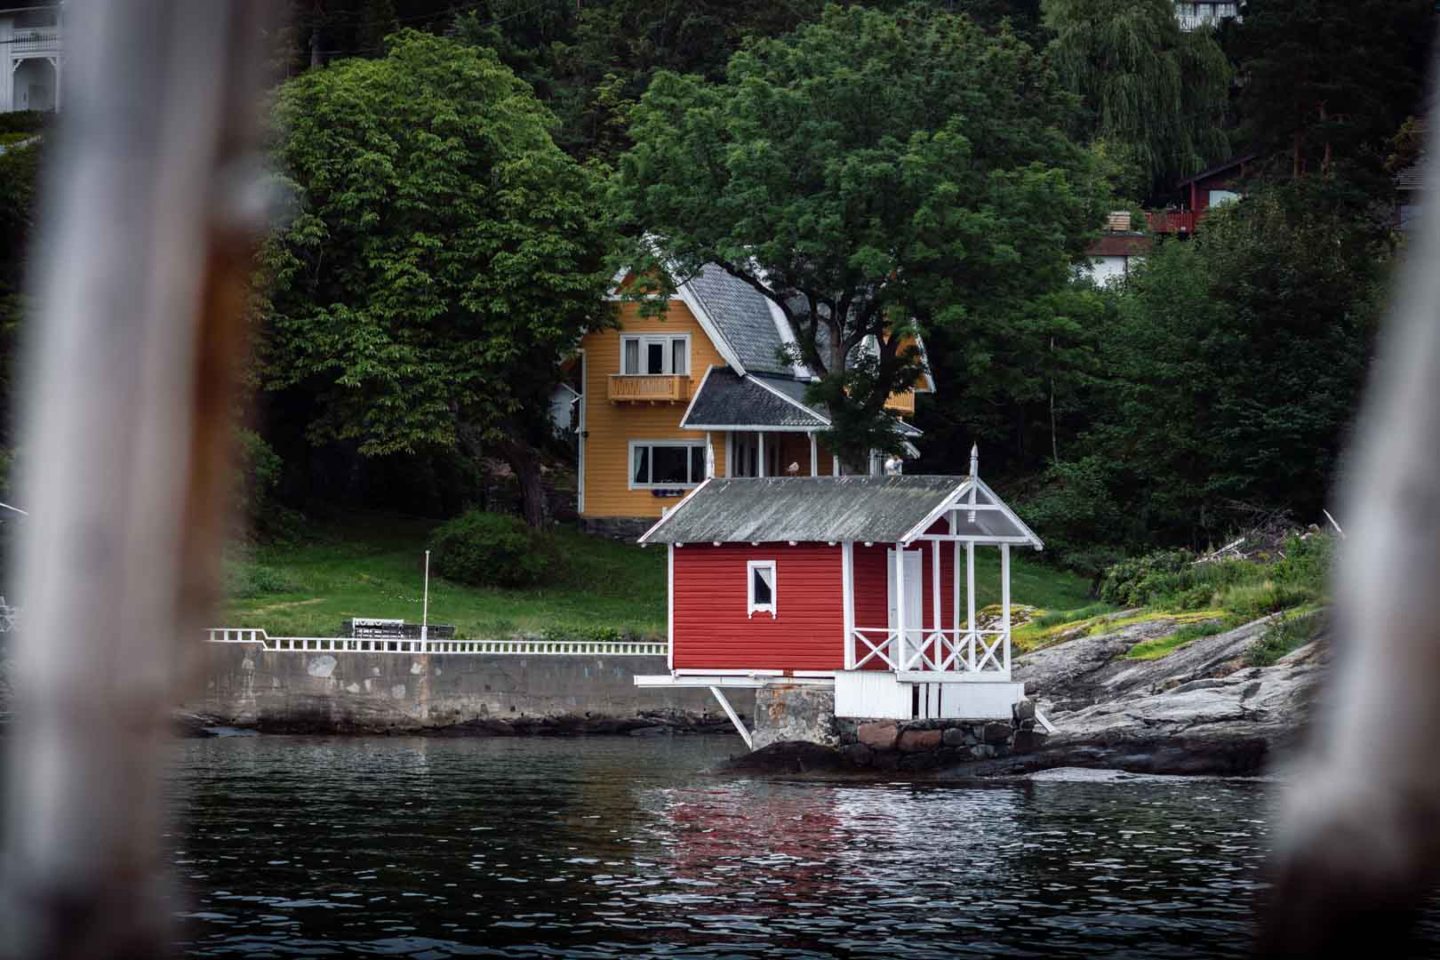 Oslo Fjord day trip